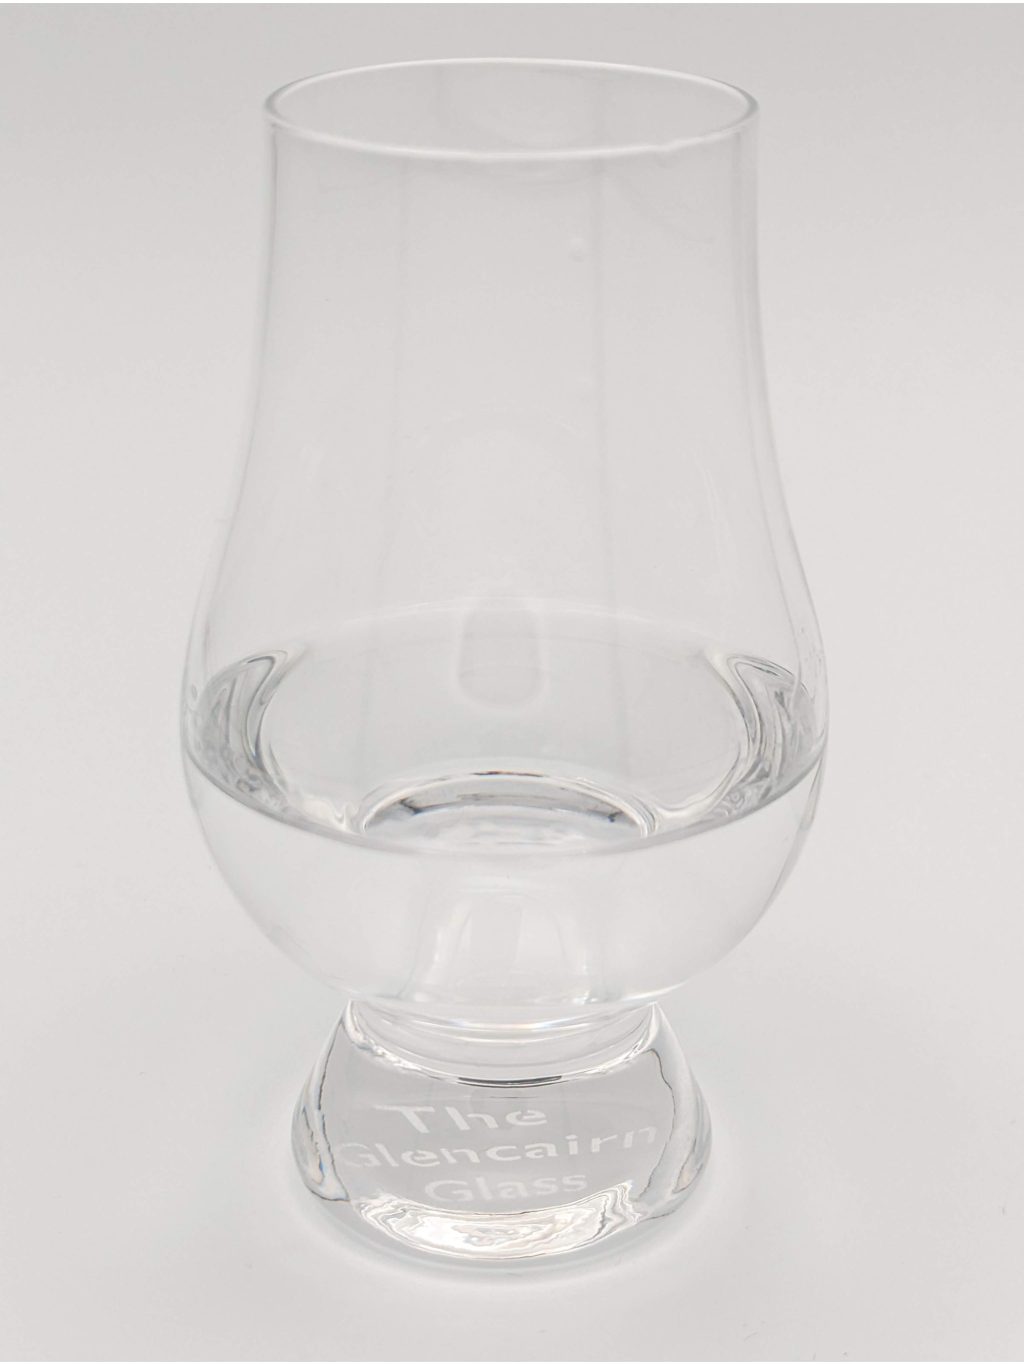 Clear liquid in a glencairn glass